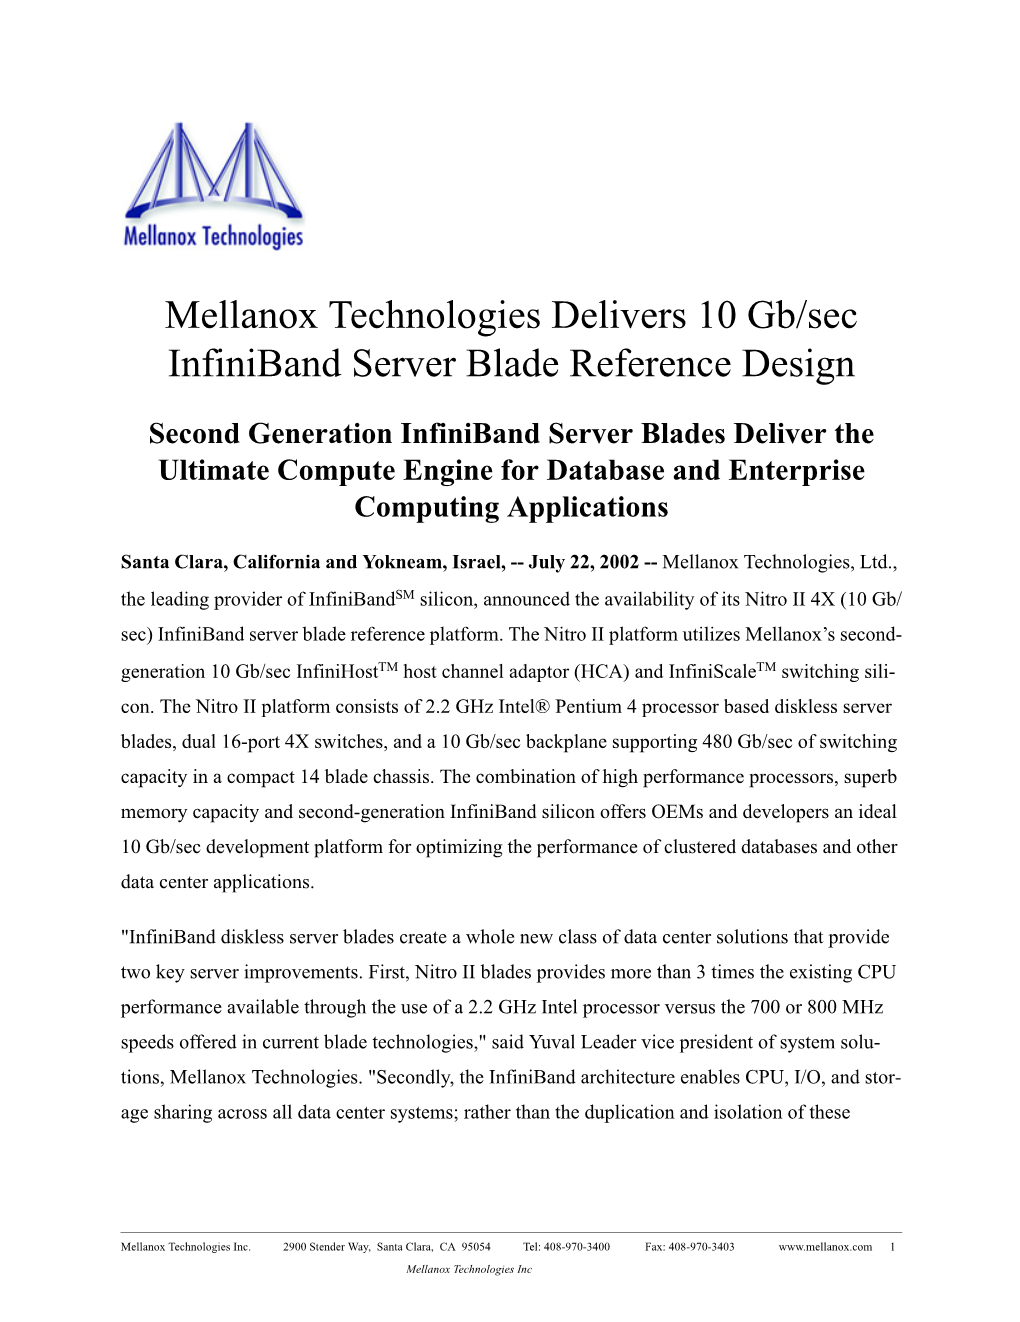 Mellanox Technologies Delivers 10 Gb/Sec Infiniband Server Blade Reference Design